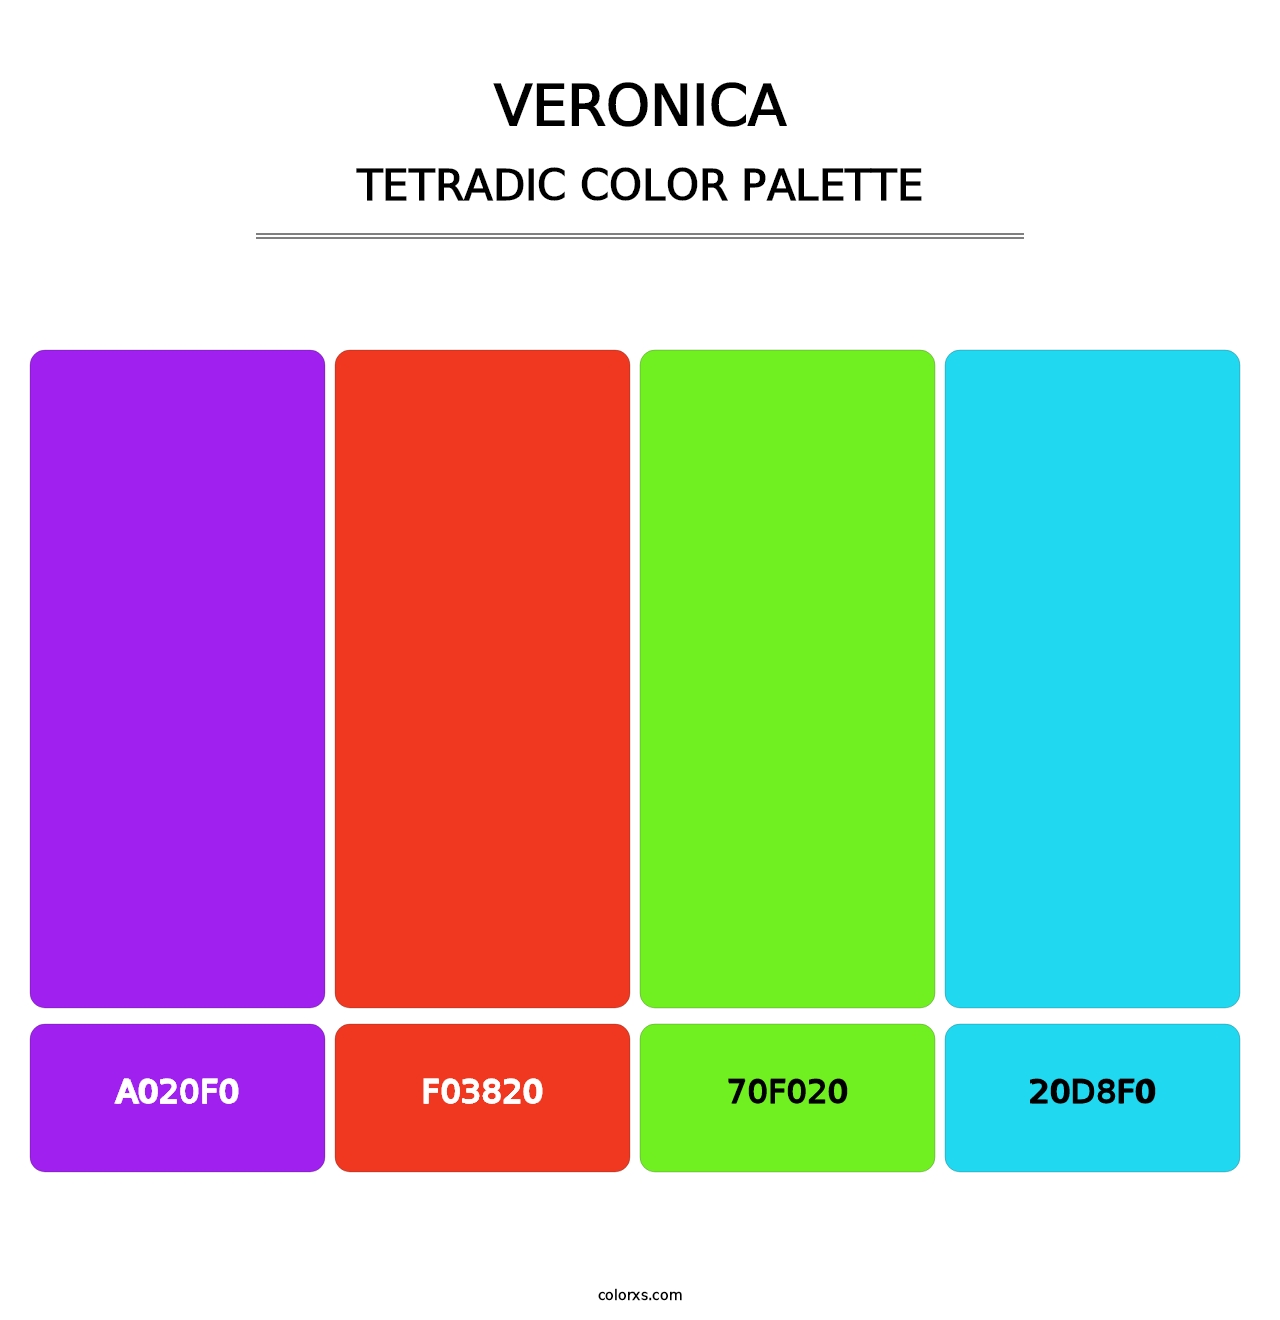 Veronica - Tetradic Color Palette